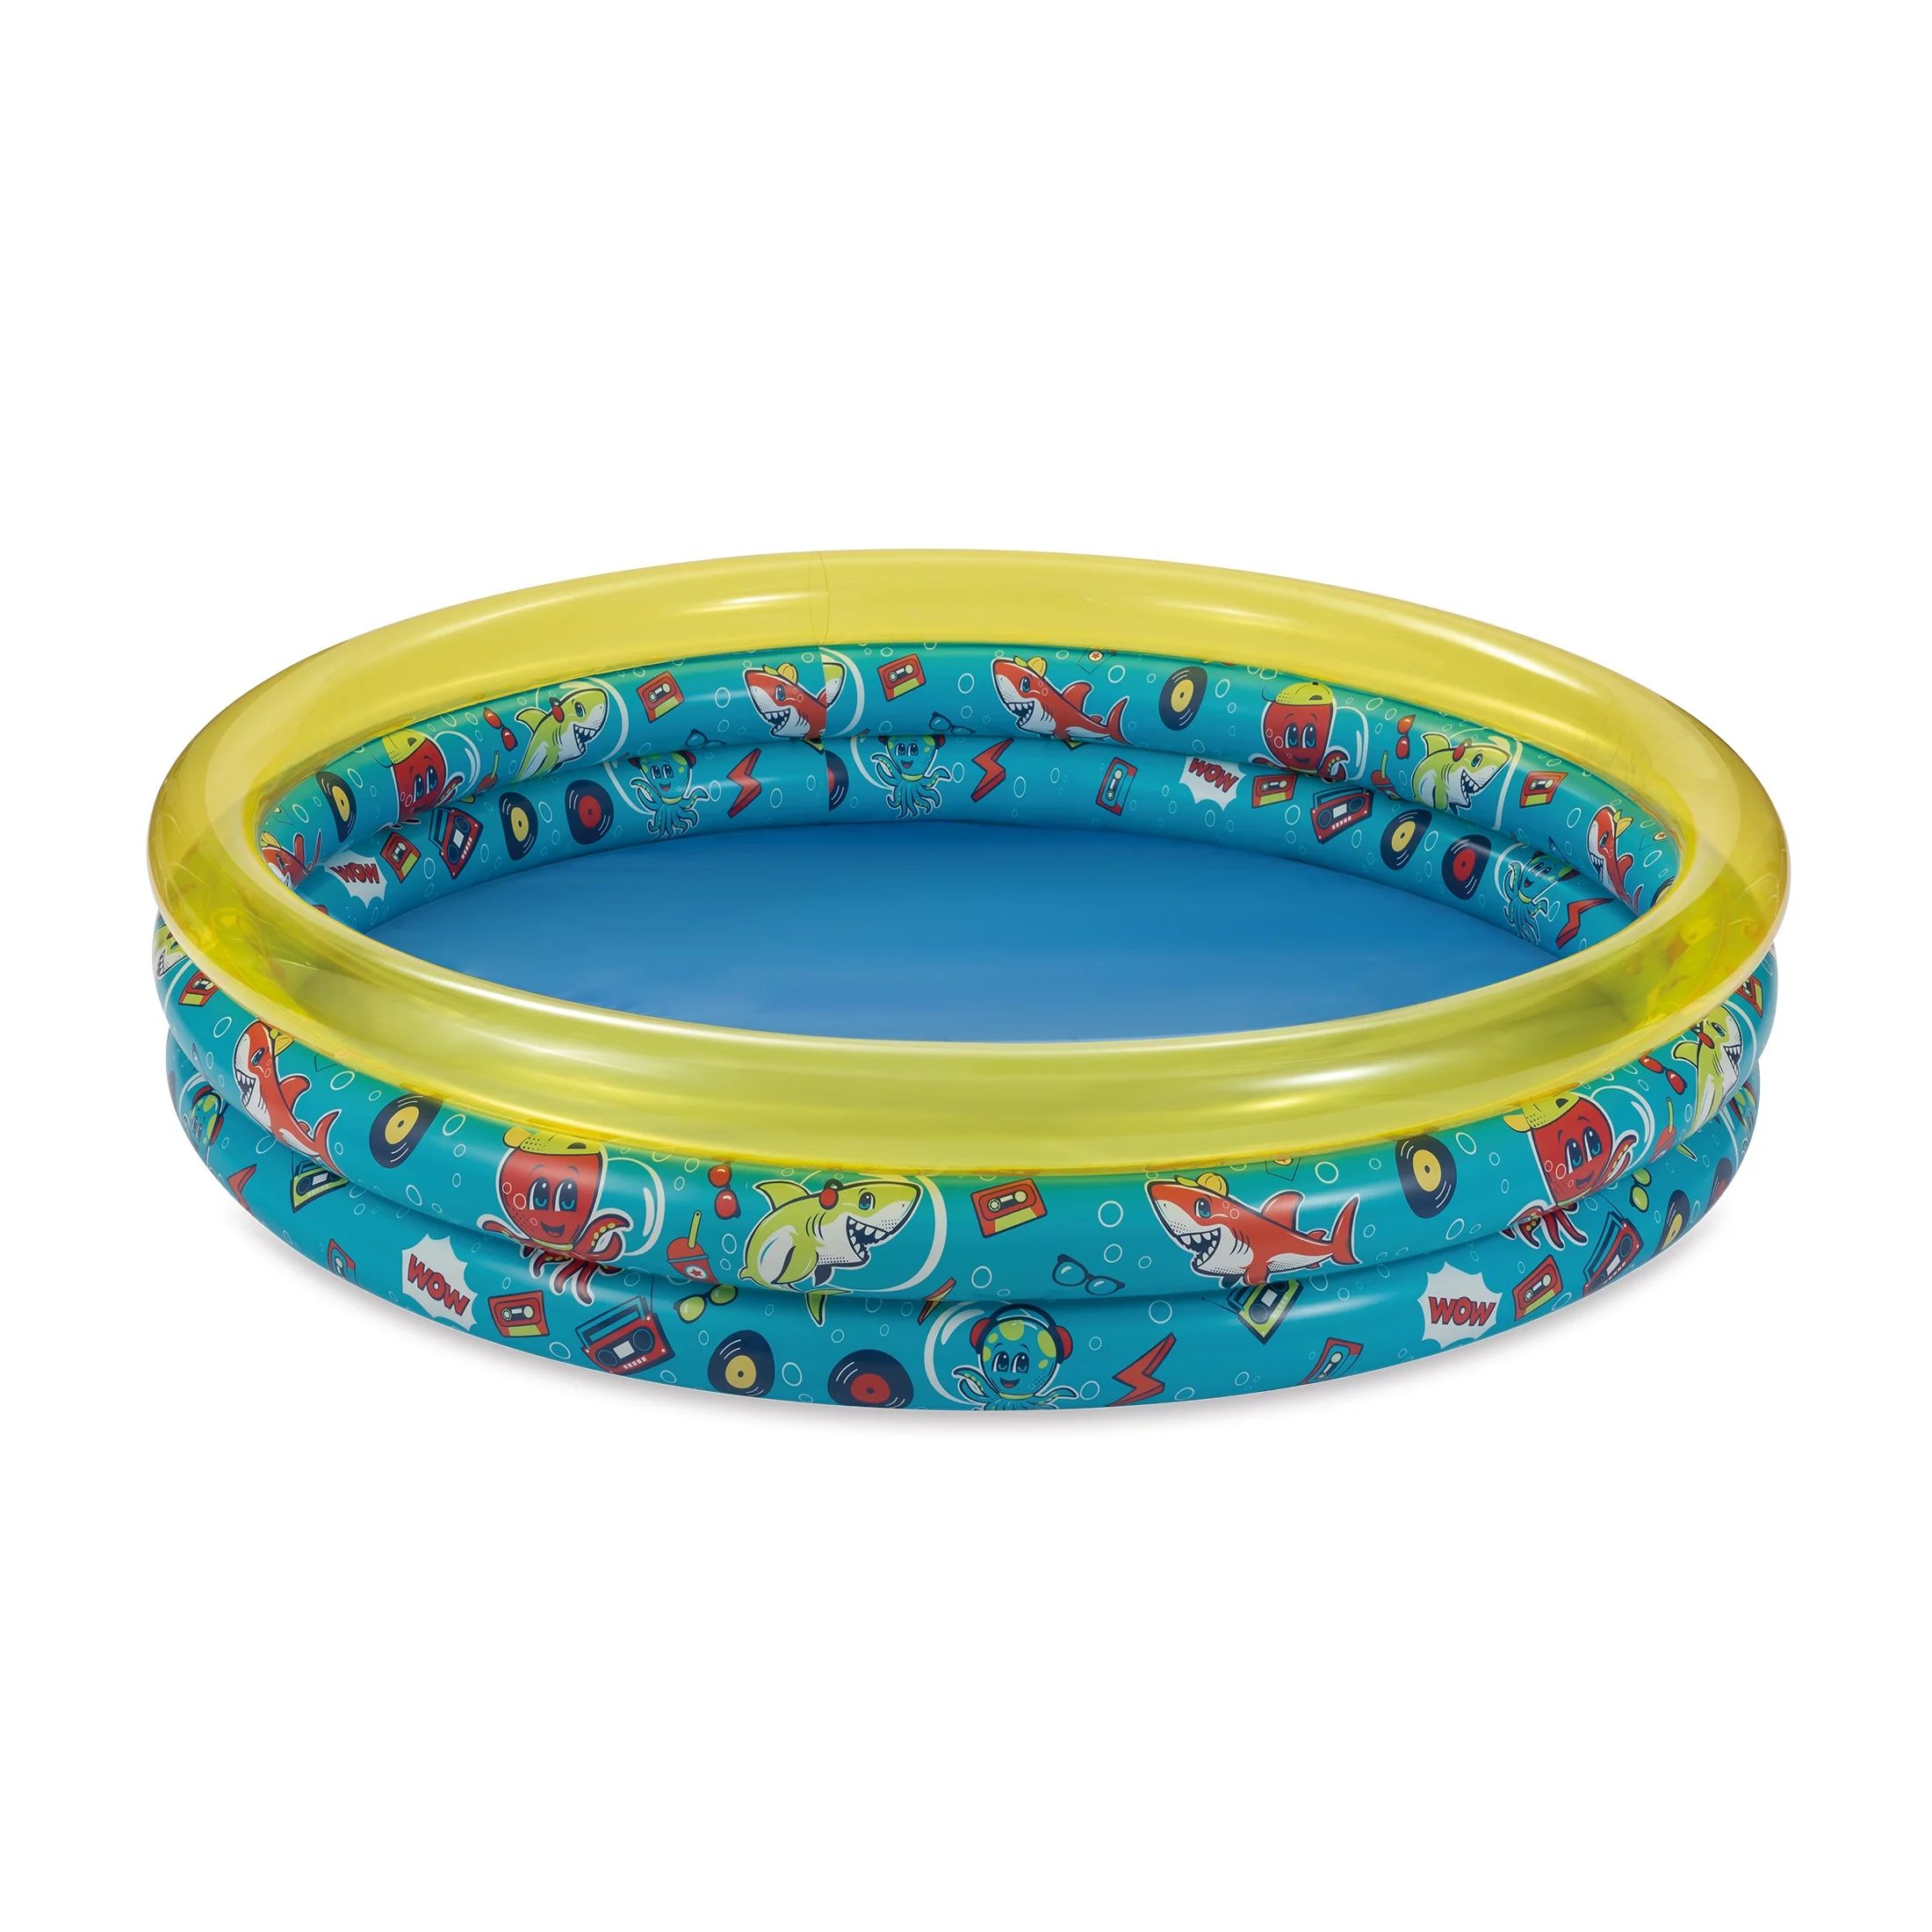 Round Inflatable 3-Ring Kiddie Splash Play Pool, Yellow, For Kids, Age 2 & up, Unisex | Walmart (US)